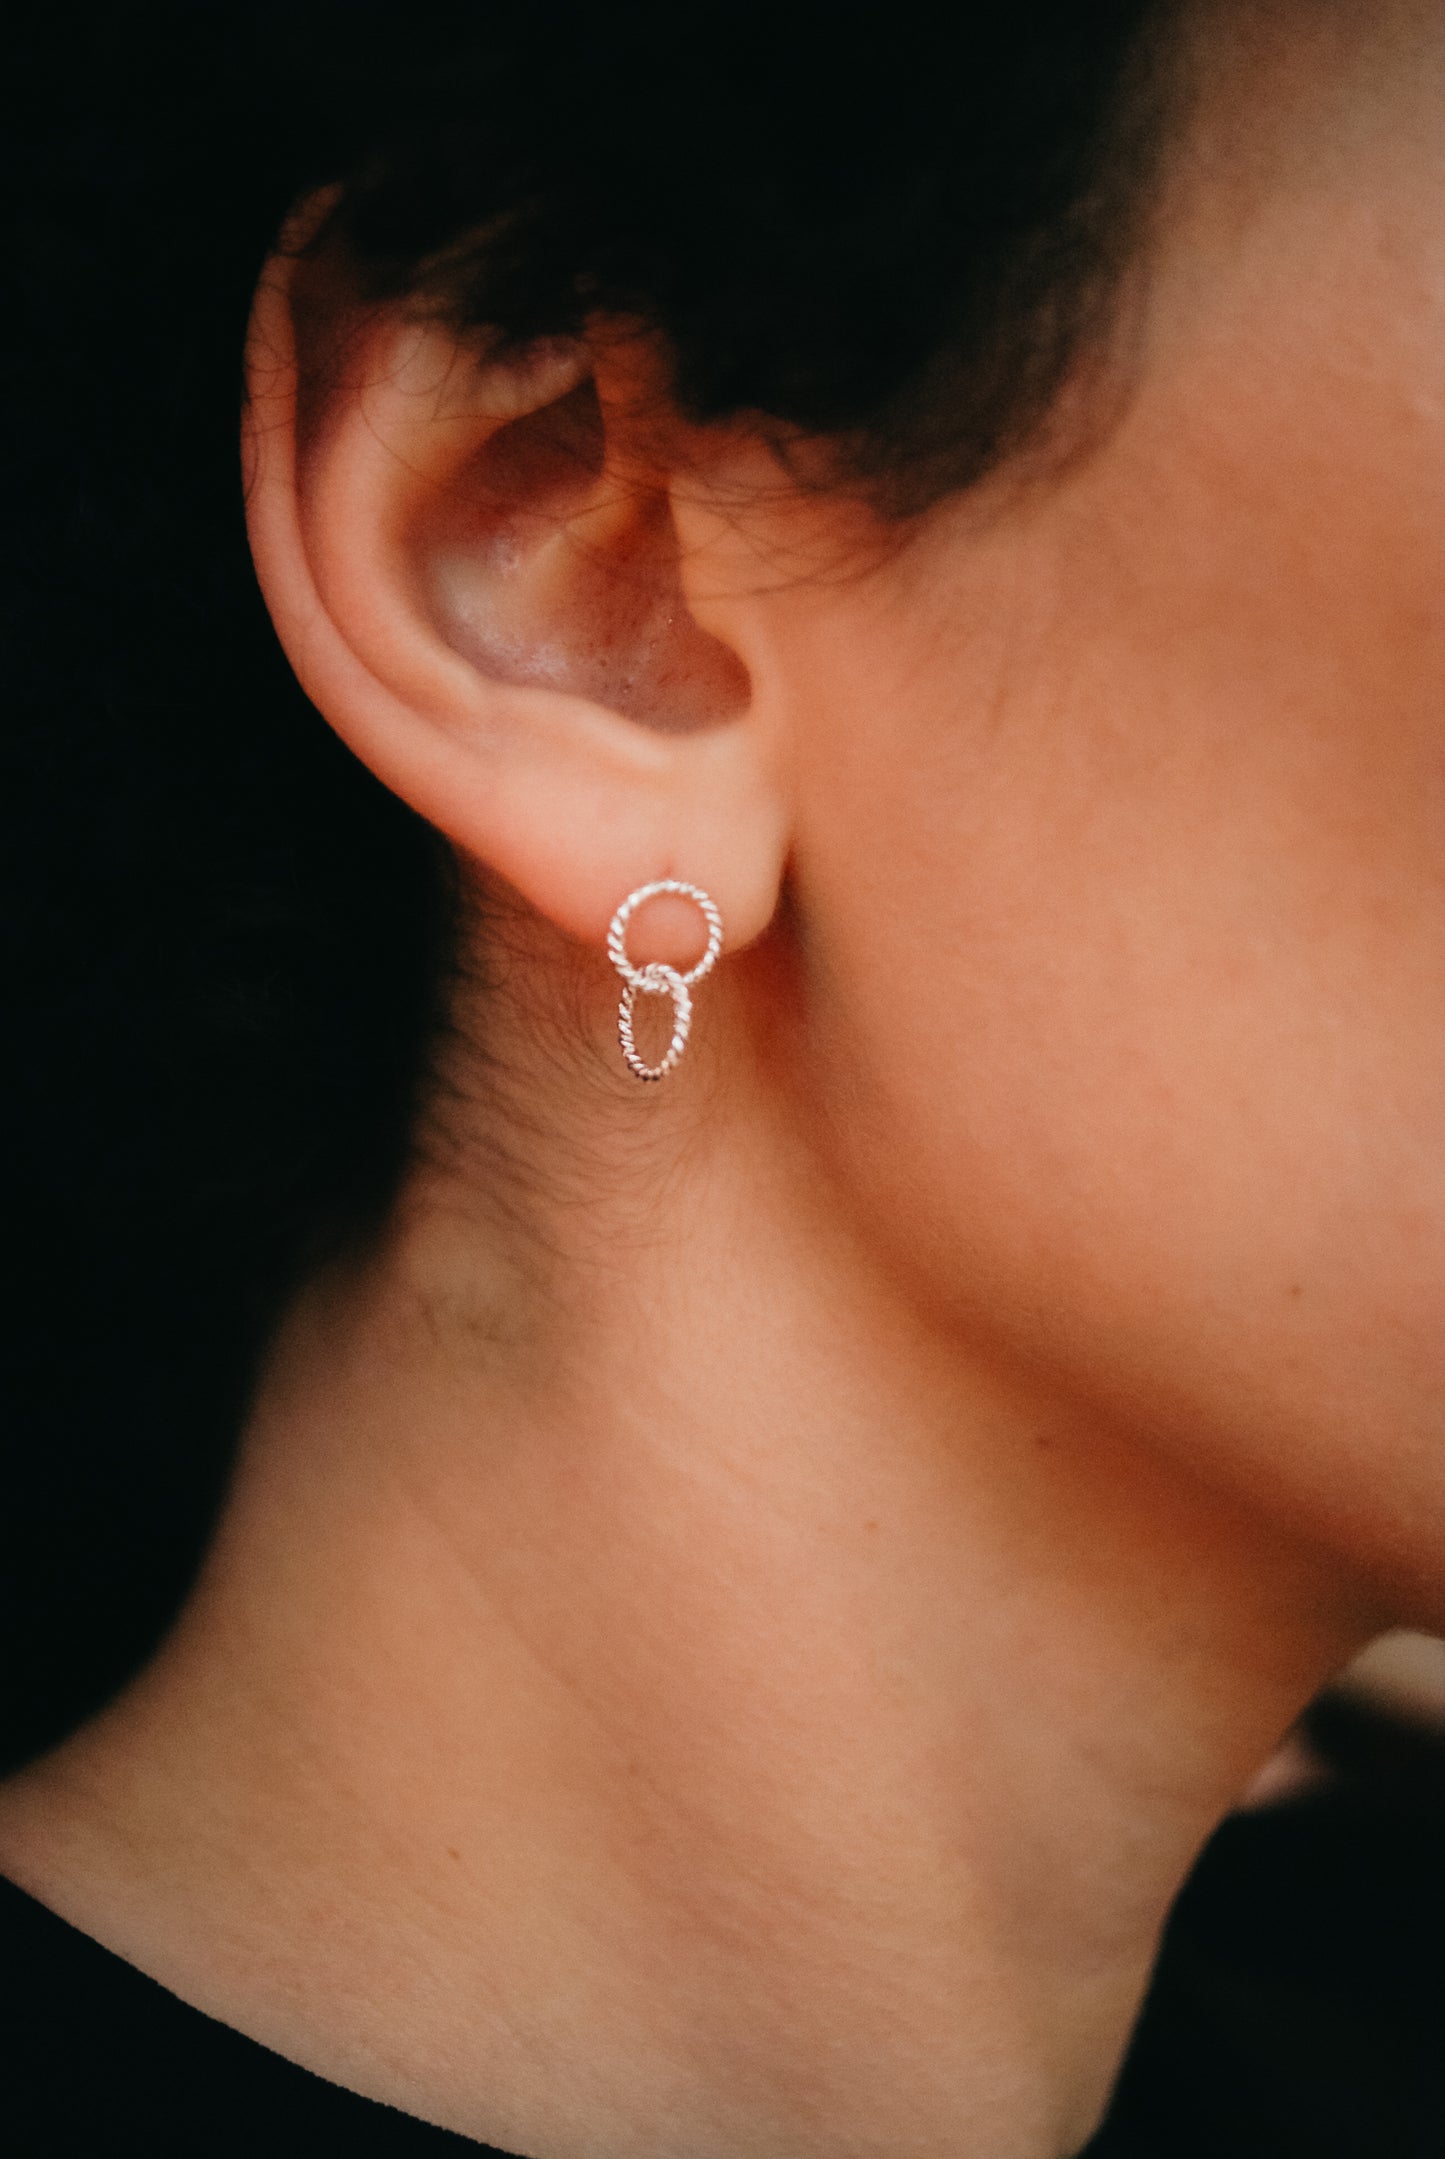 Twist Link Stud Earrings, Gold Fill, Rose Gold Fill, or Sterling Silver